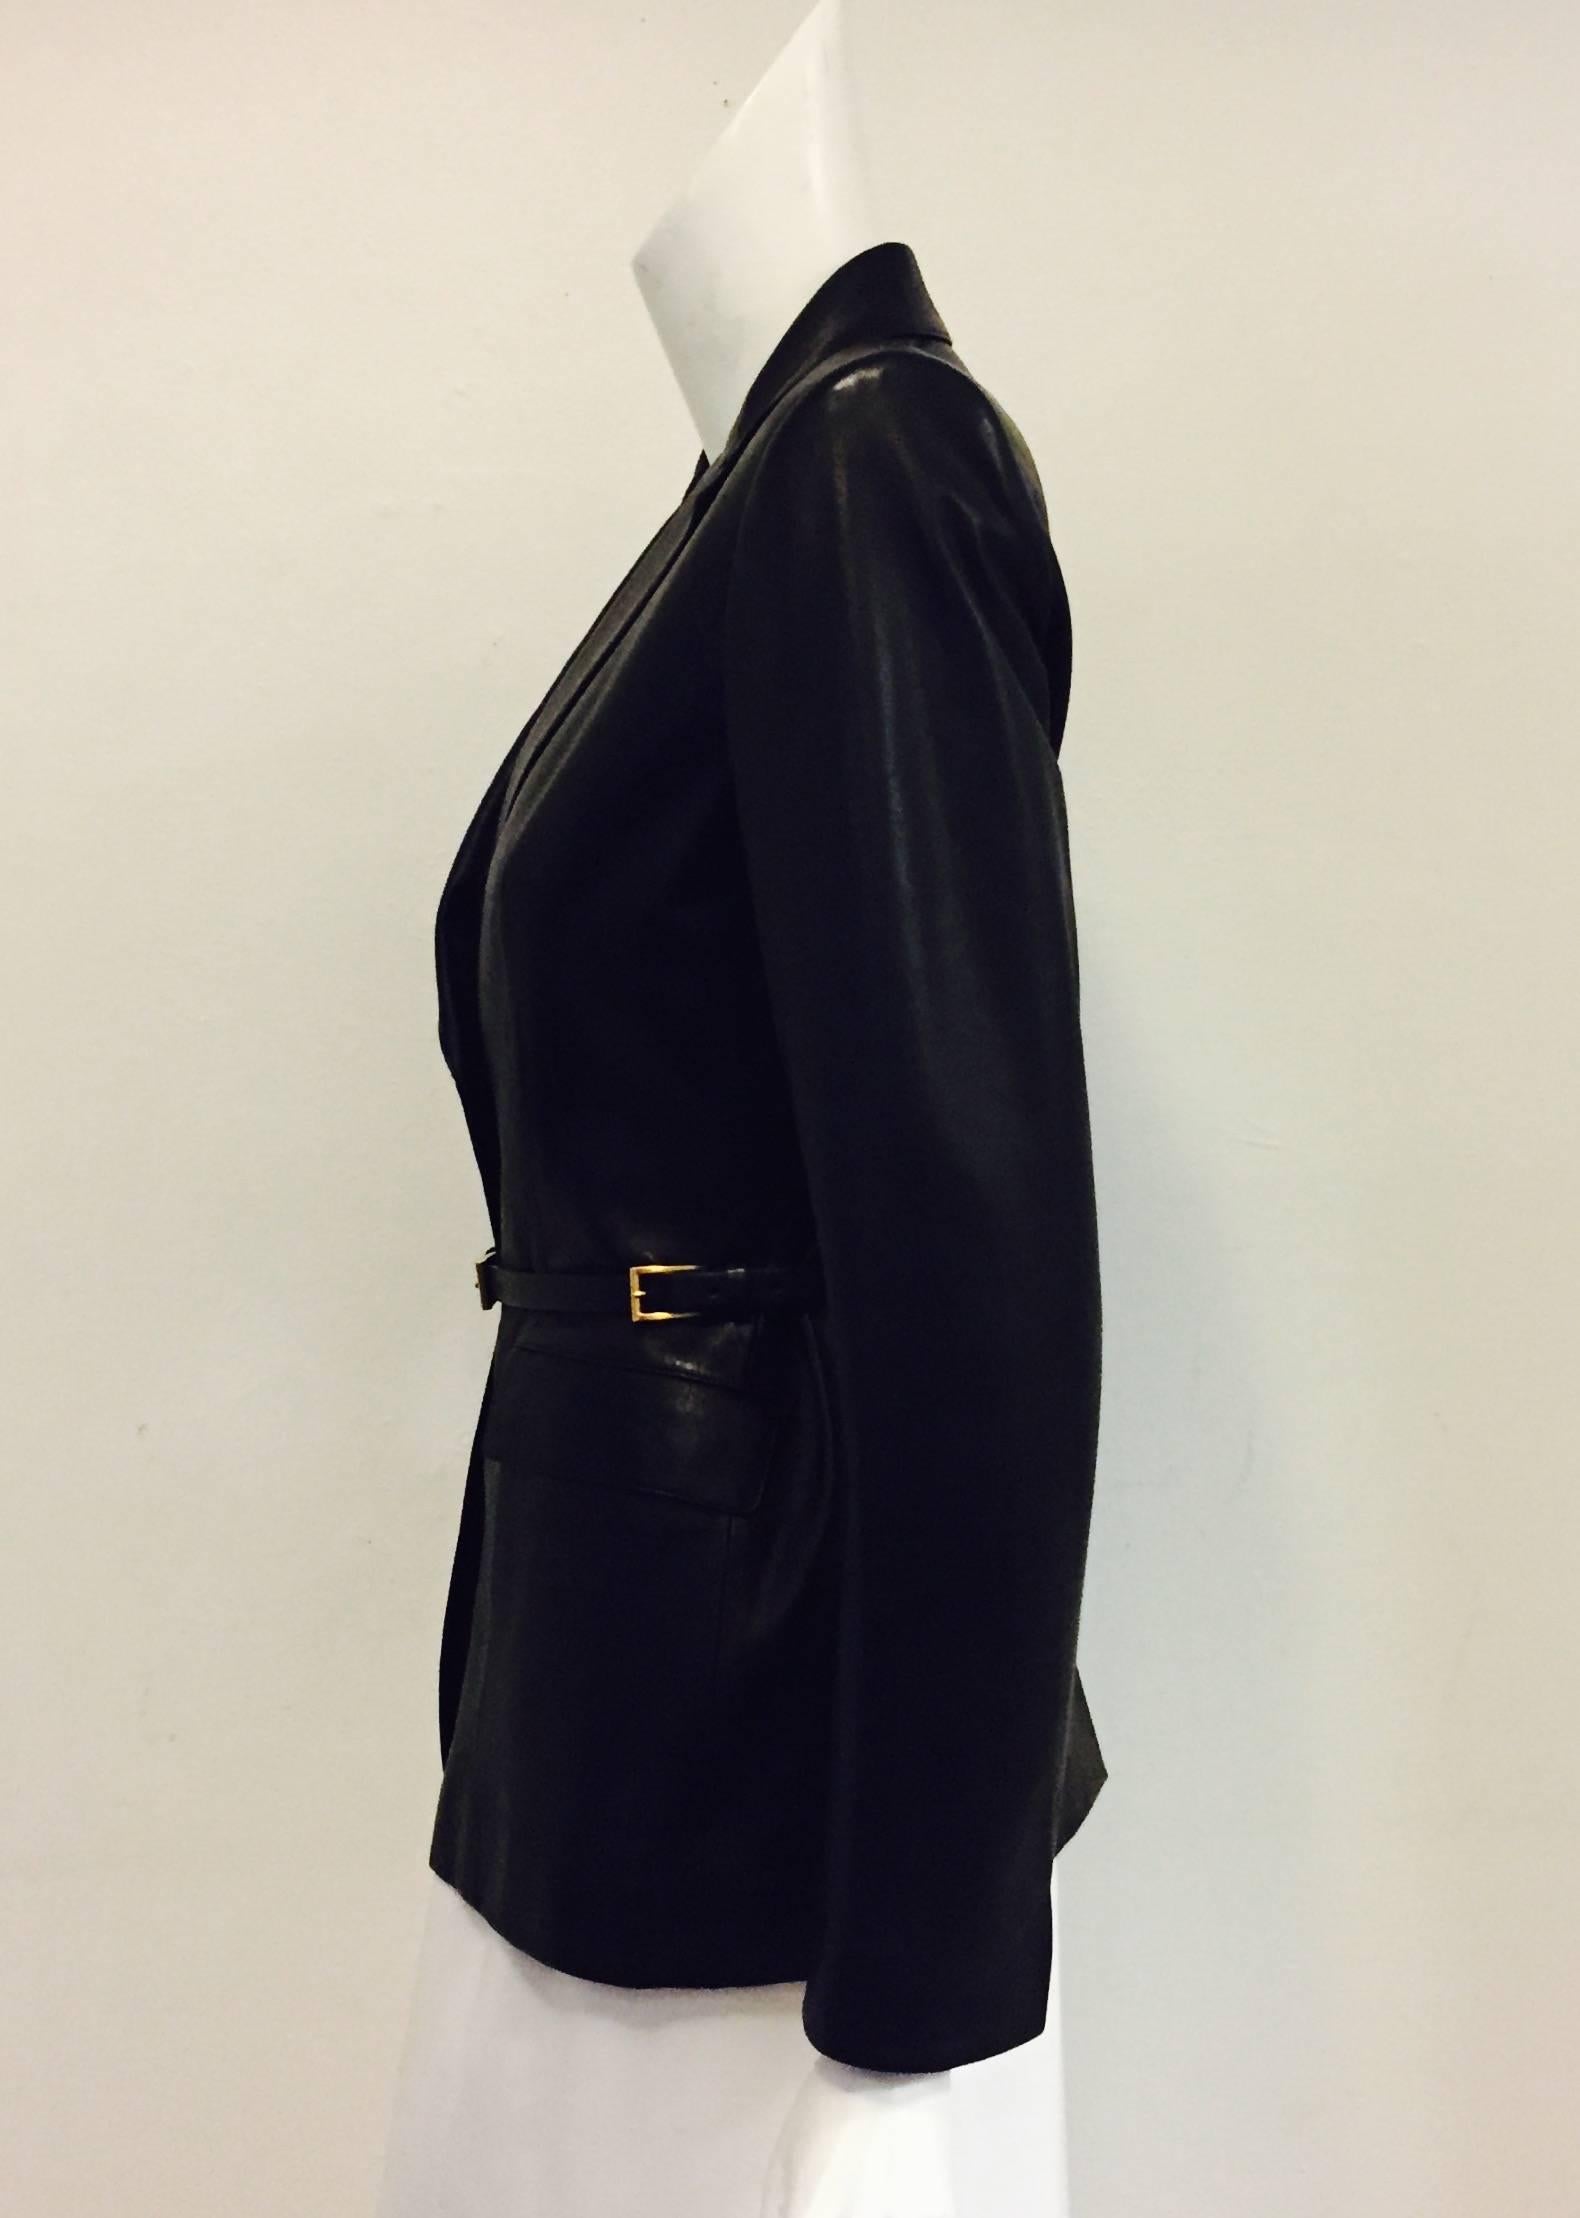 Women's Prestigious Prada Black Fitted Ladies Leather Lambskin Jacket w Detach. Belt